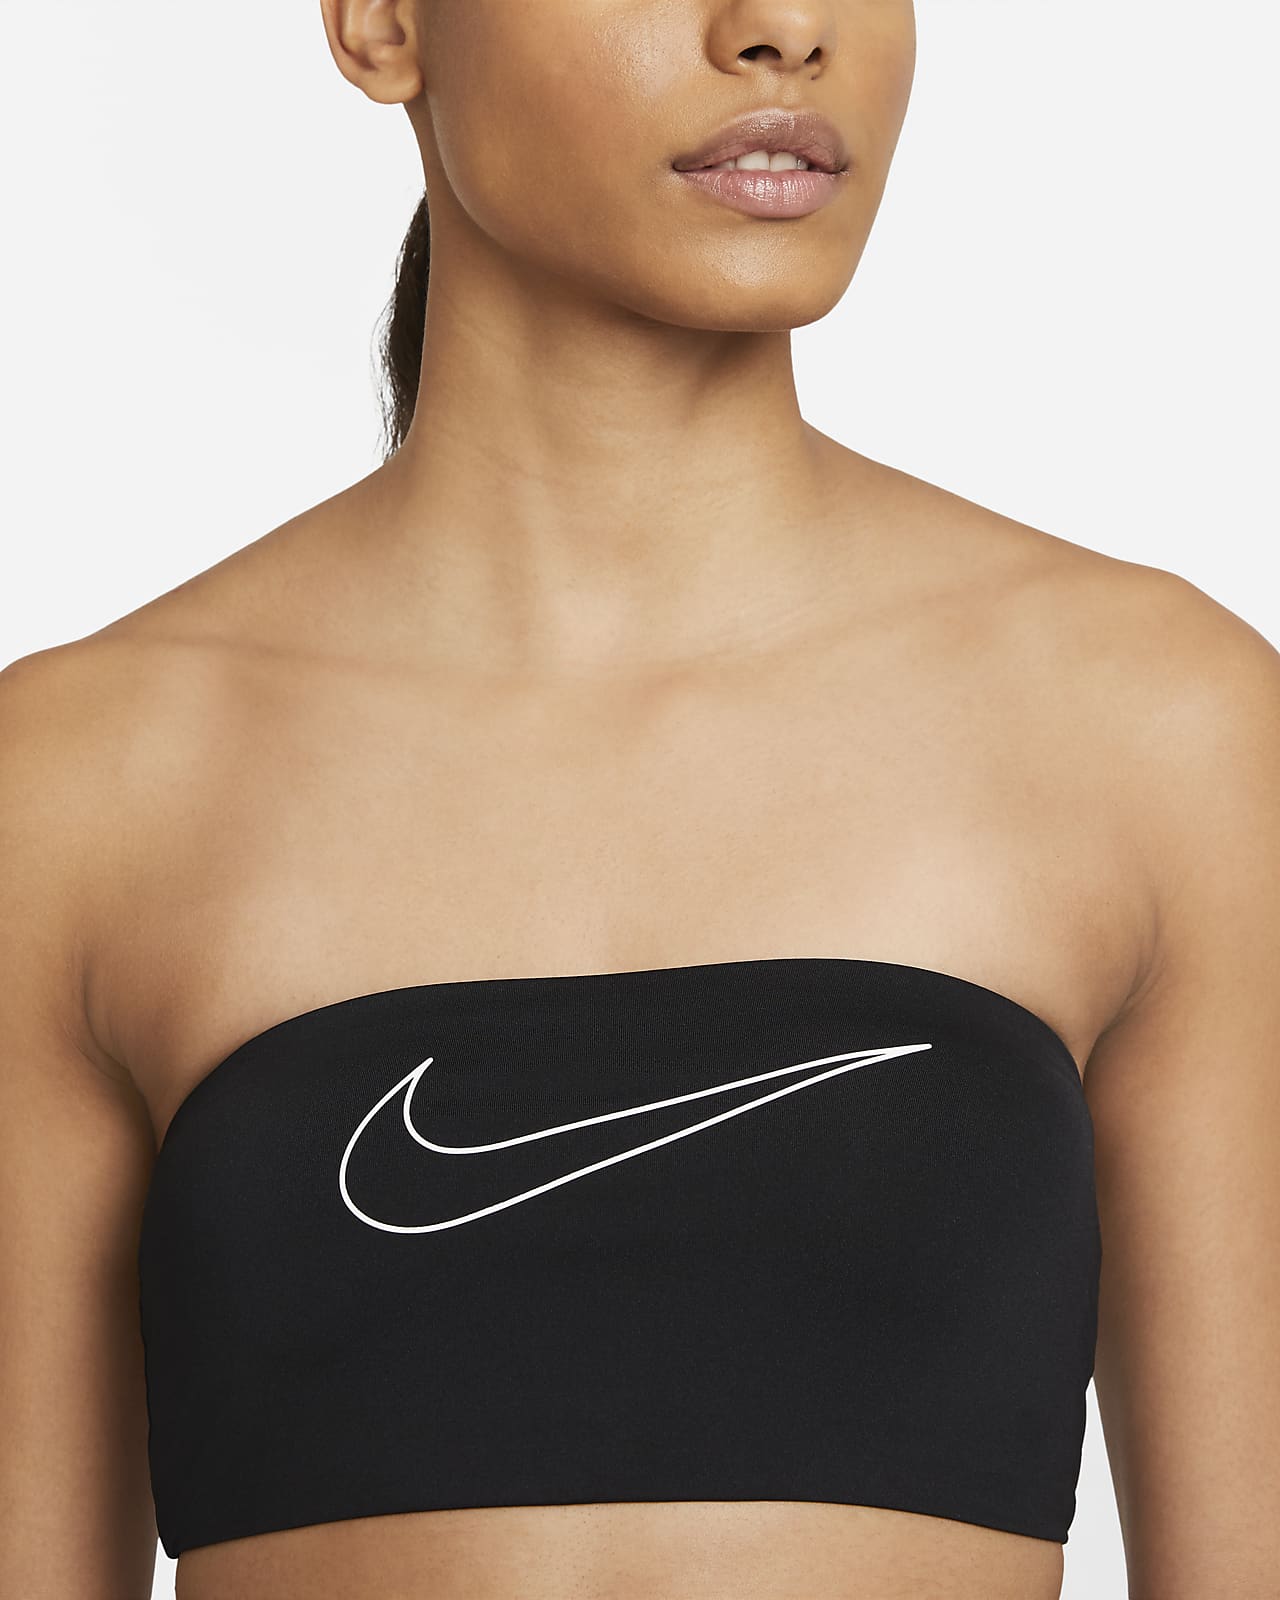 At dræbe Vedholdende log Nike Women's Bandeau Bikini Top. Nike LU